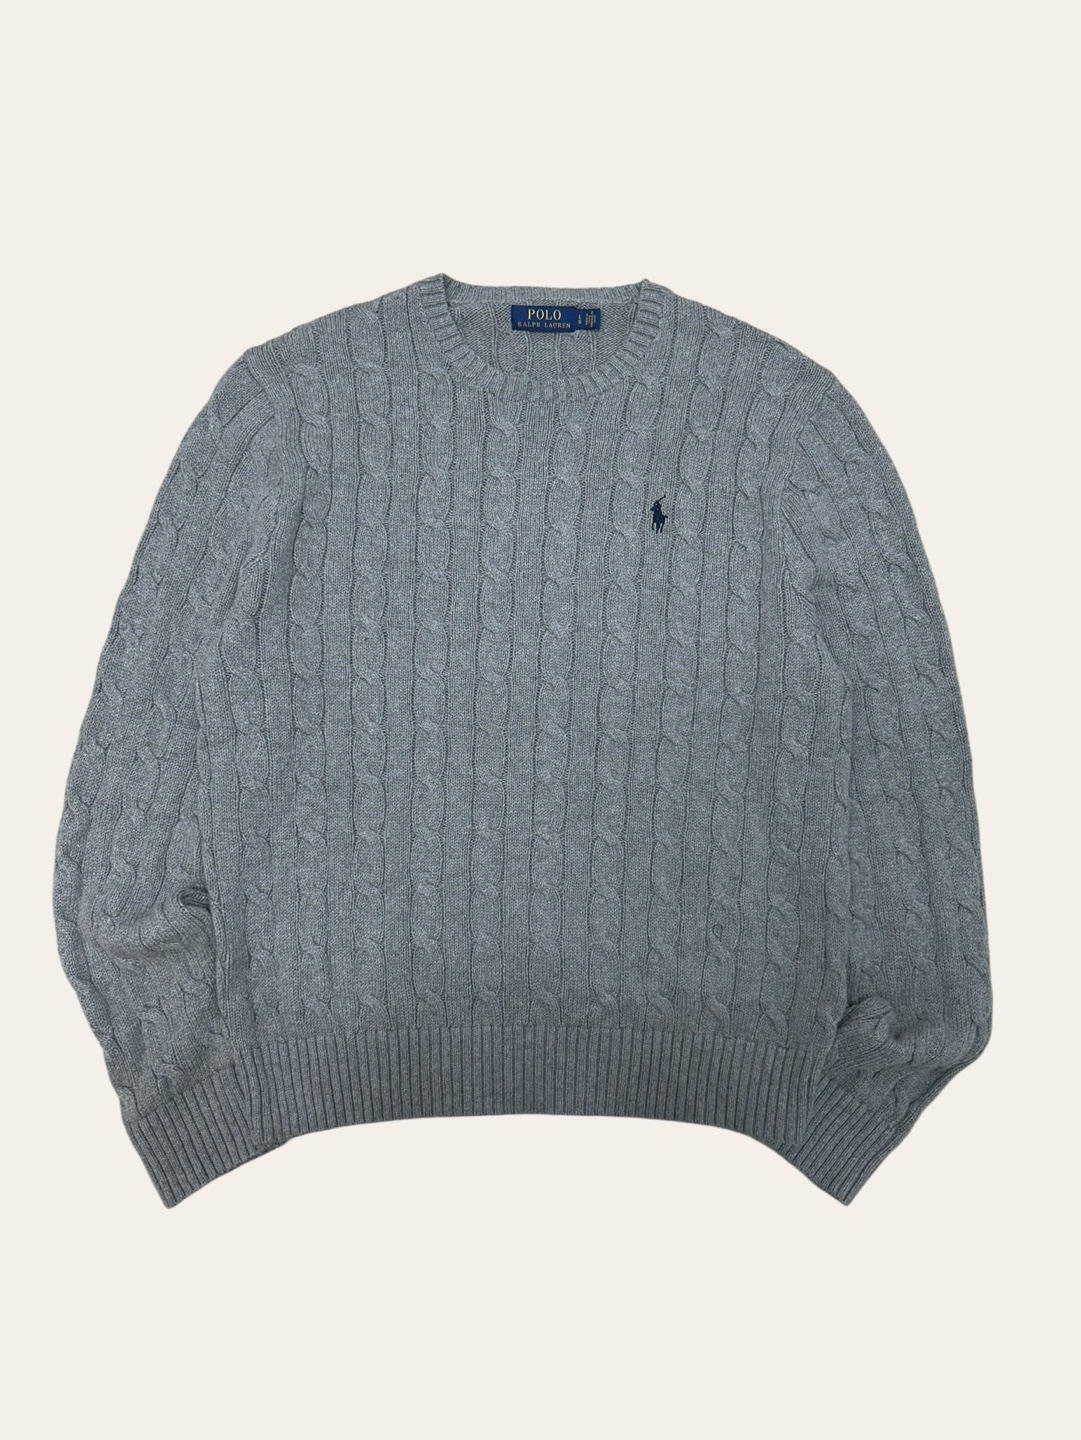 Polo ralph lauren gray cotton cable sweater L